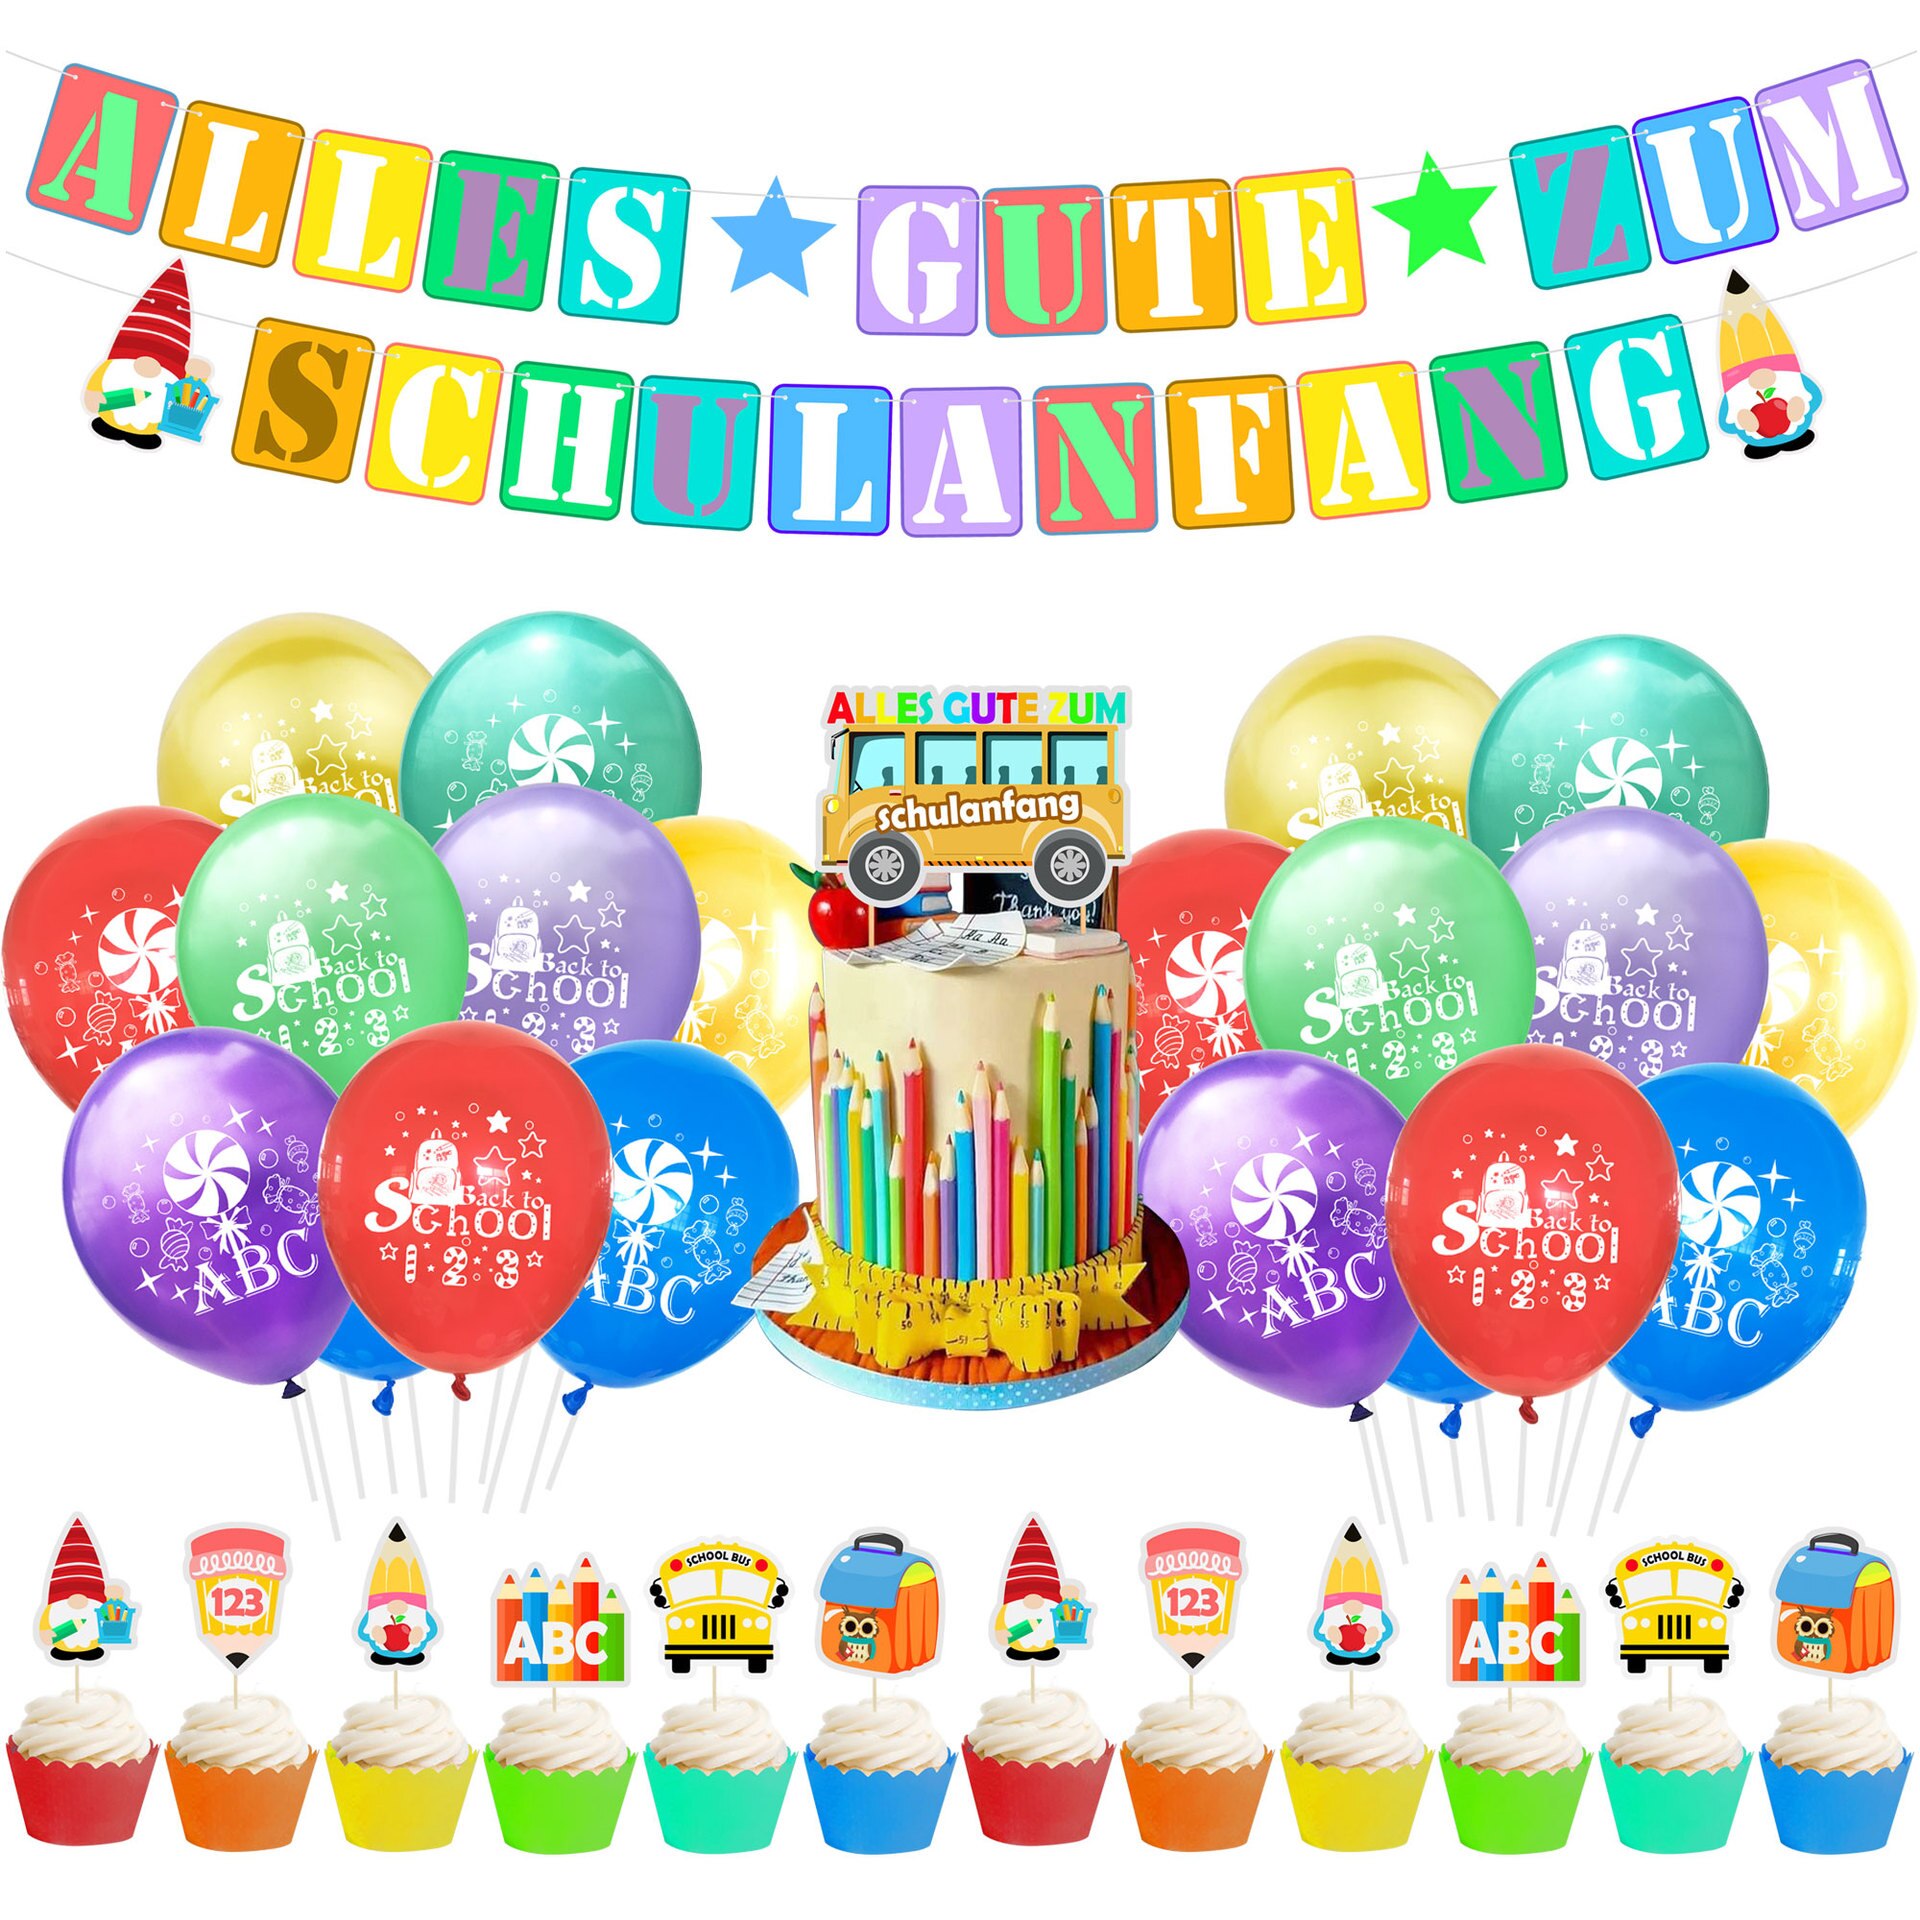 Celebration School Party Decor Set Party Banner Cake Topper Cupcake Topper Balloons Alles Gute Zum Schulanfang